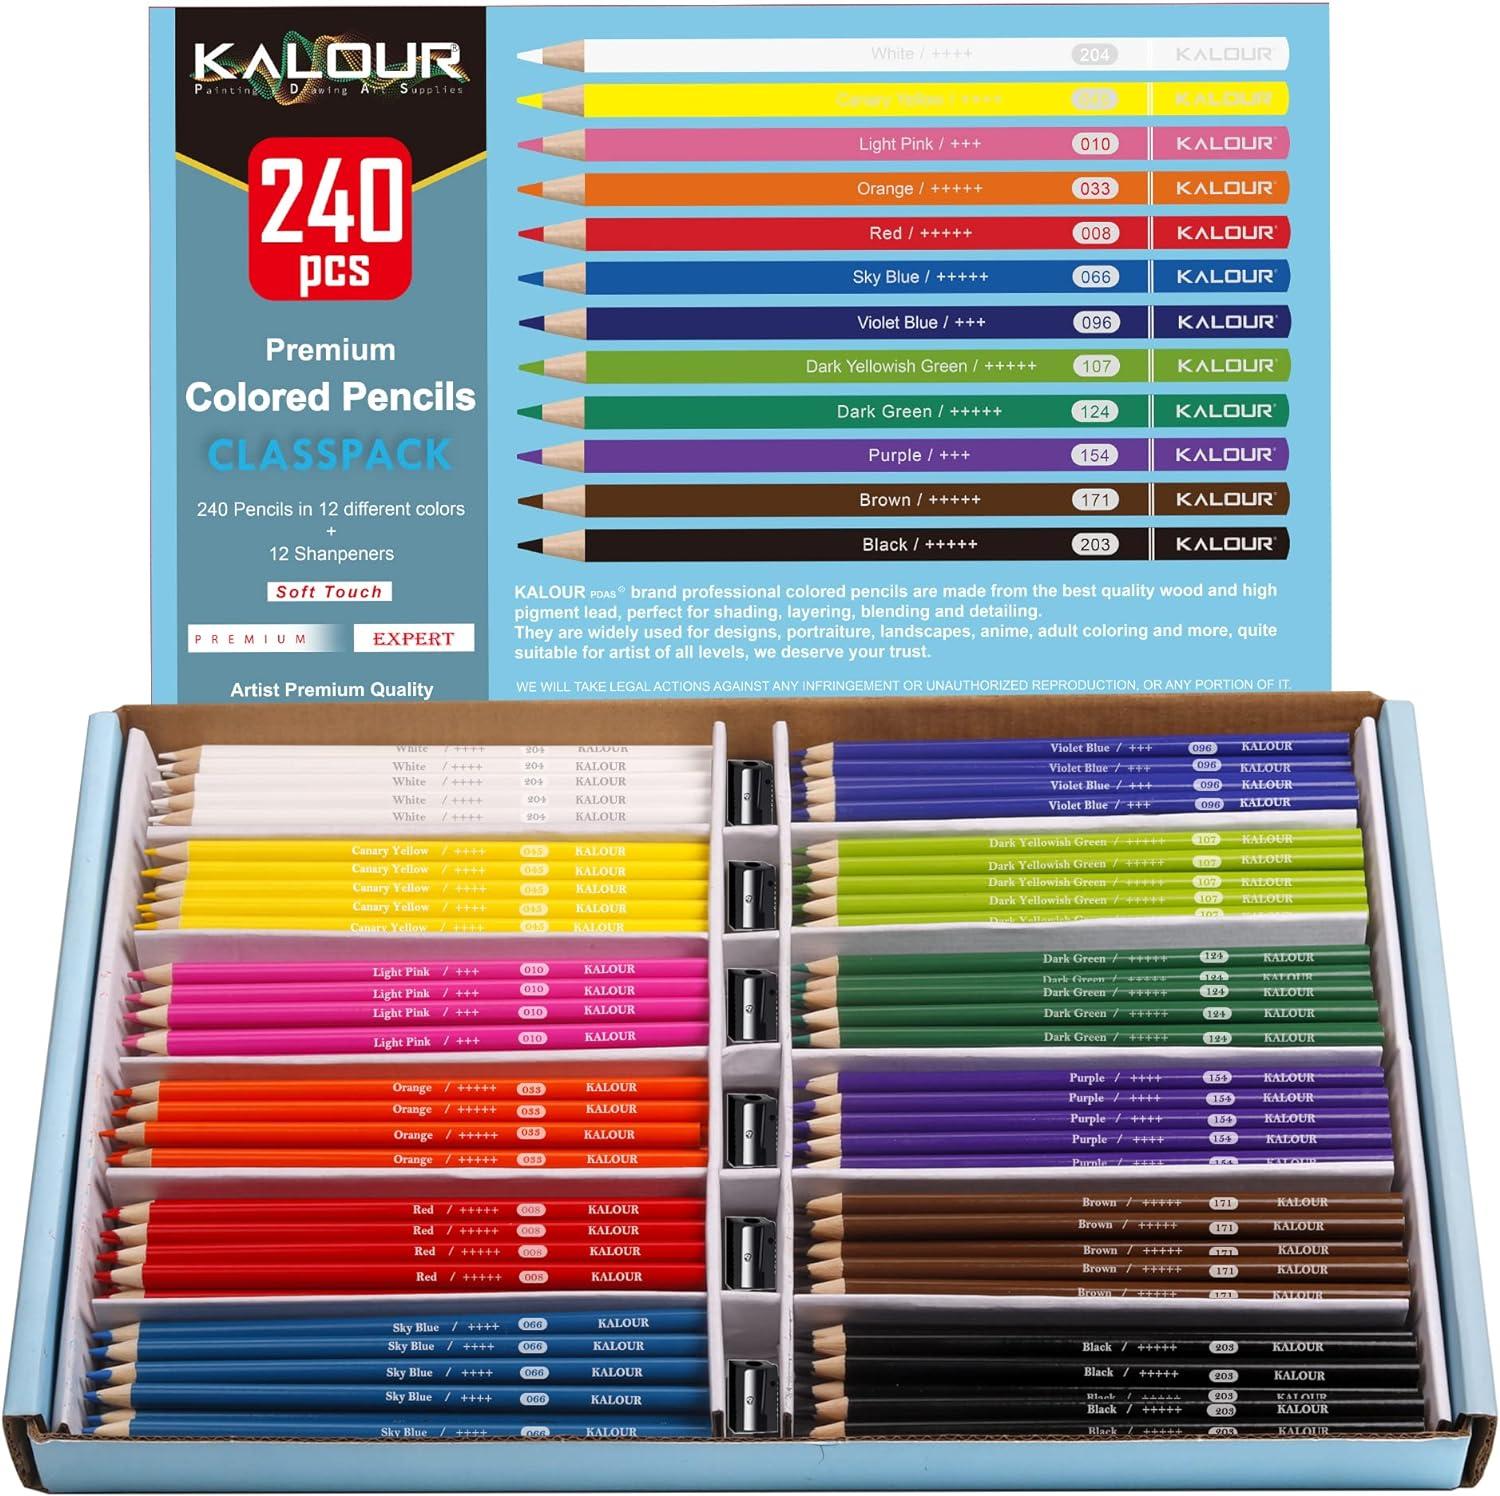 kalour colored pencils classpack 240 count12 assorted colors bulk school supplies  kalour b0bympyzy2